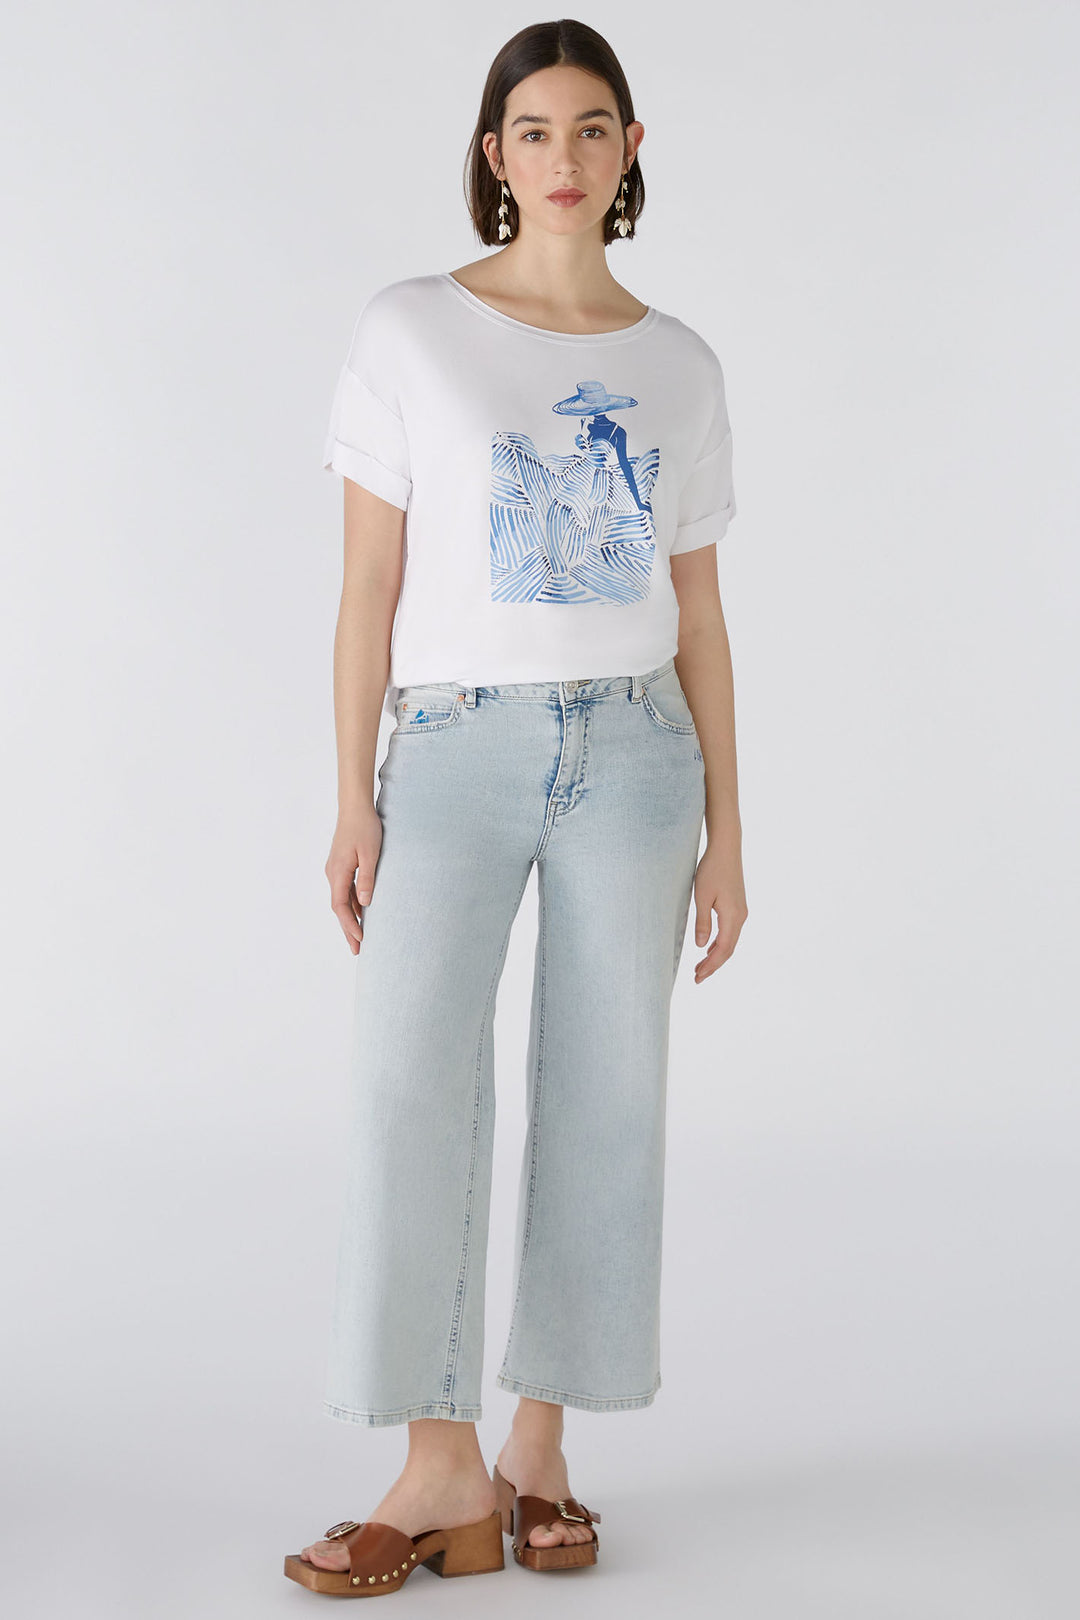 Oui 87384 Optic White Blue Fashionista Motif T-Shirt - Olivia Grace Fashion